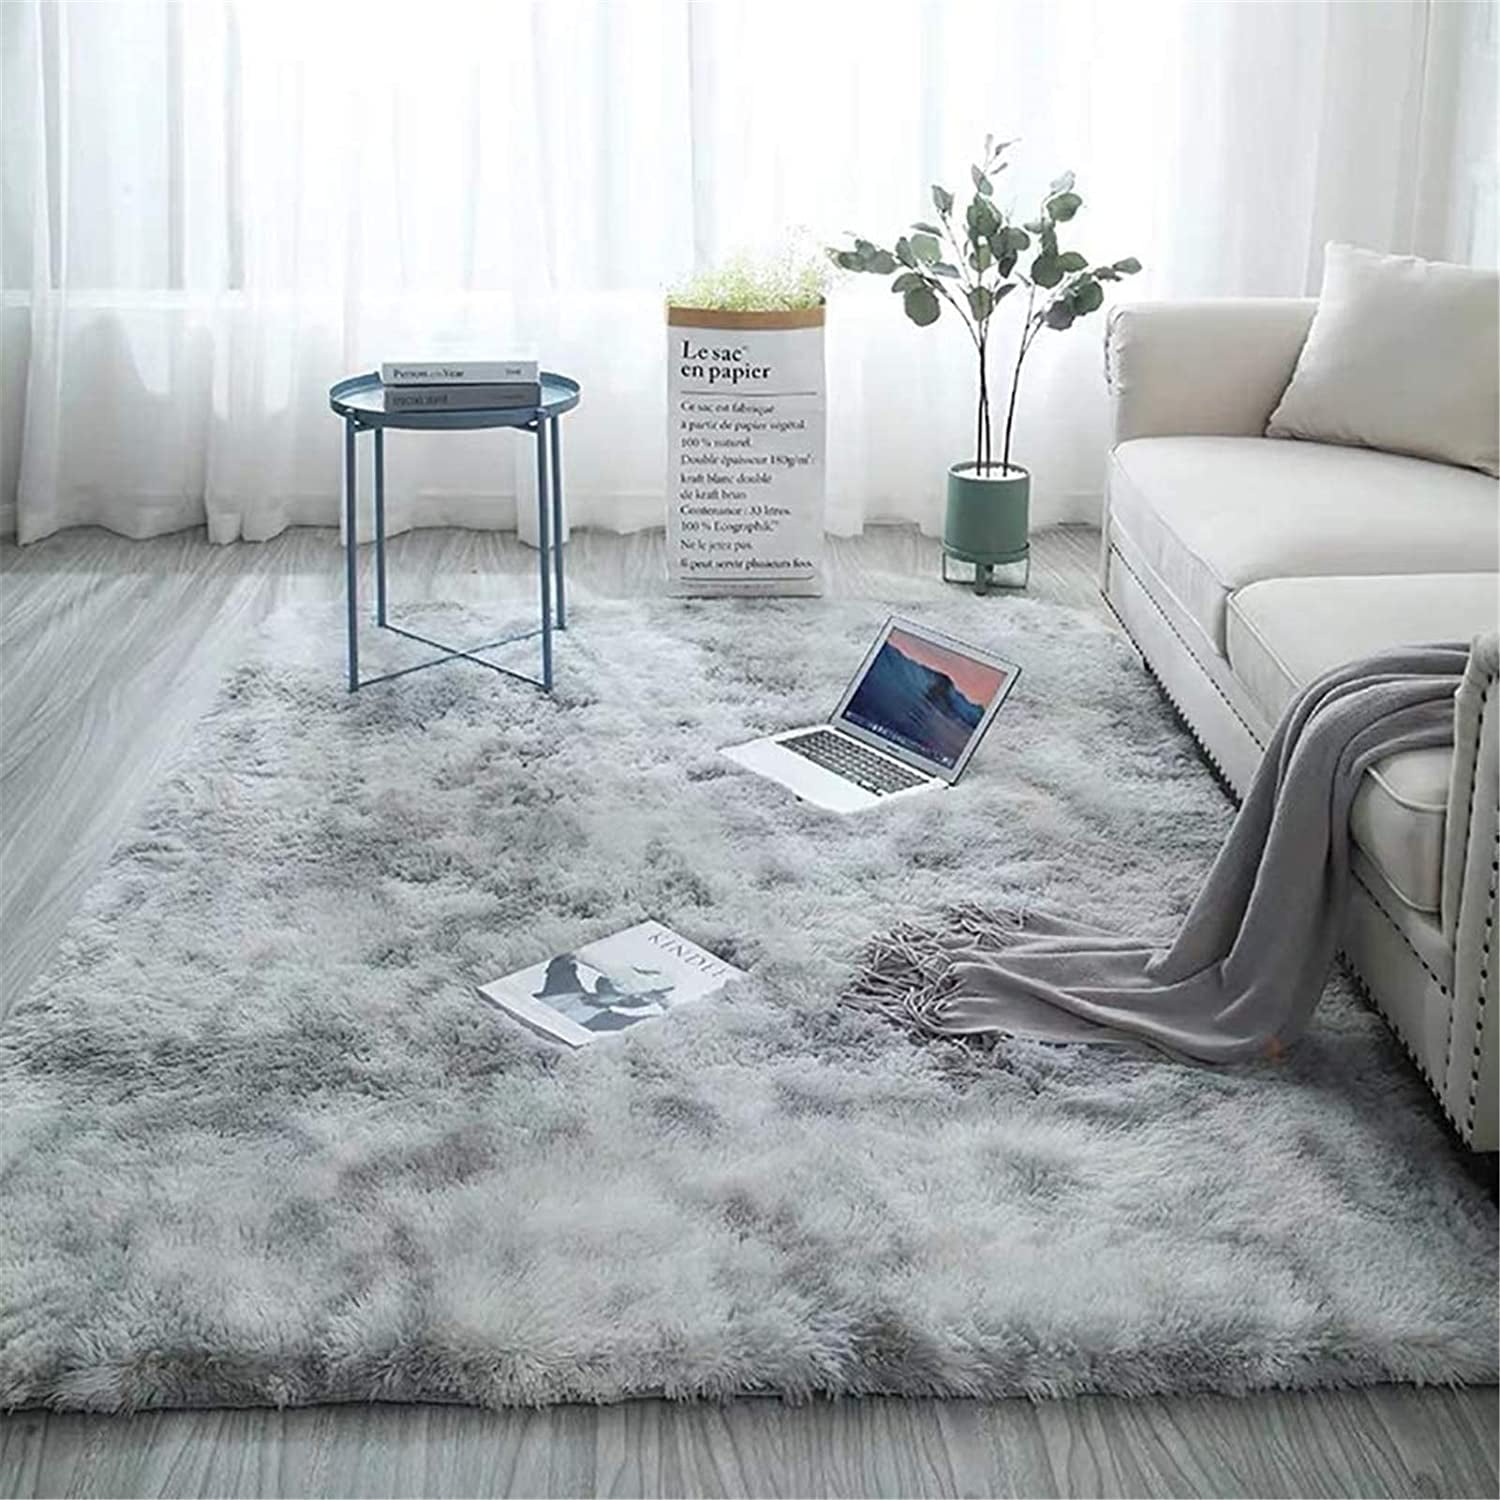 160*200 Floor Carpet Fluffy Shag Shaggy Rug Silky Thick Soft Area Rugs Mat Home